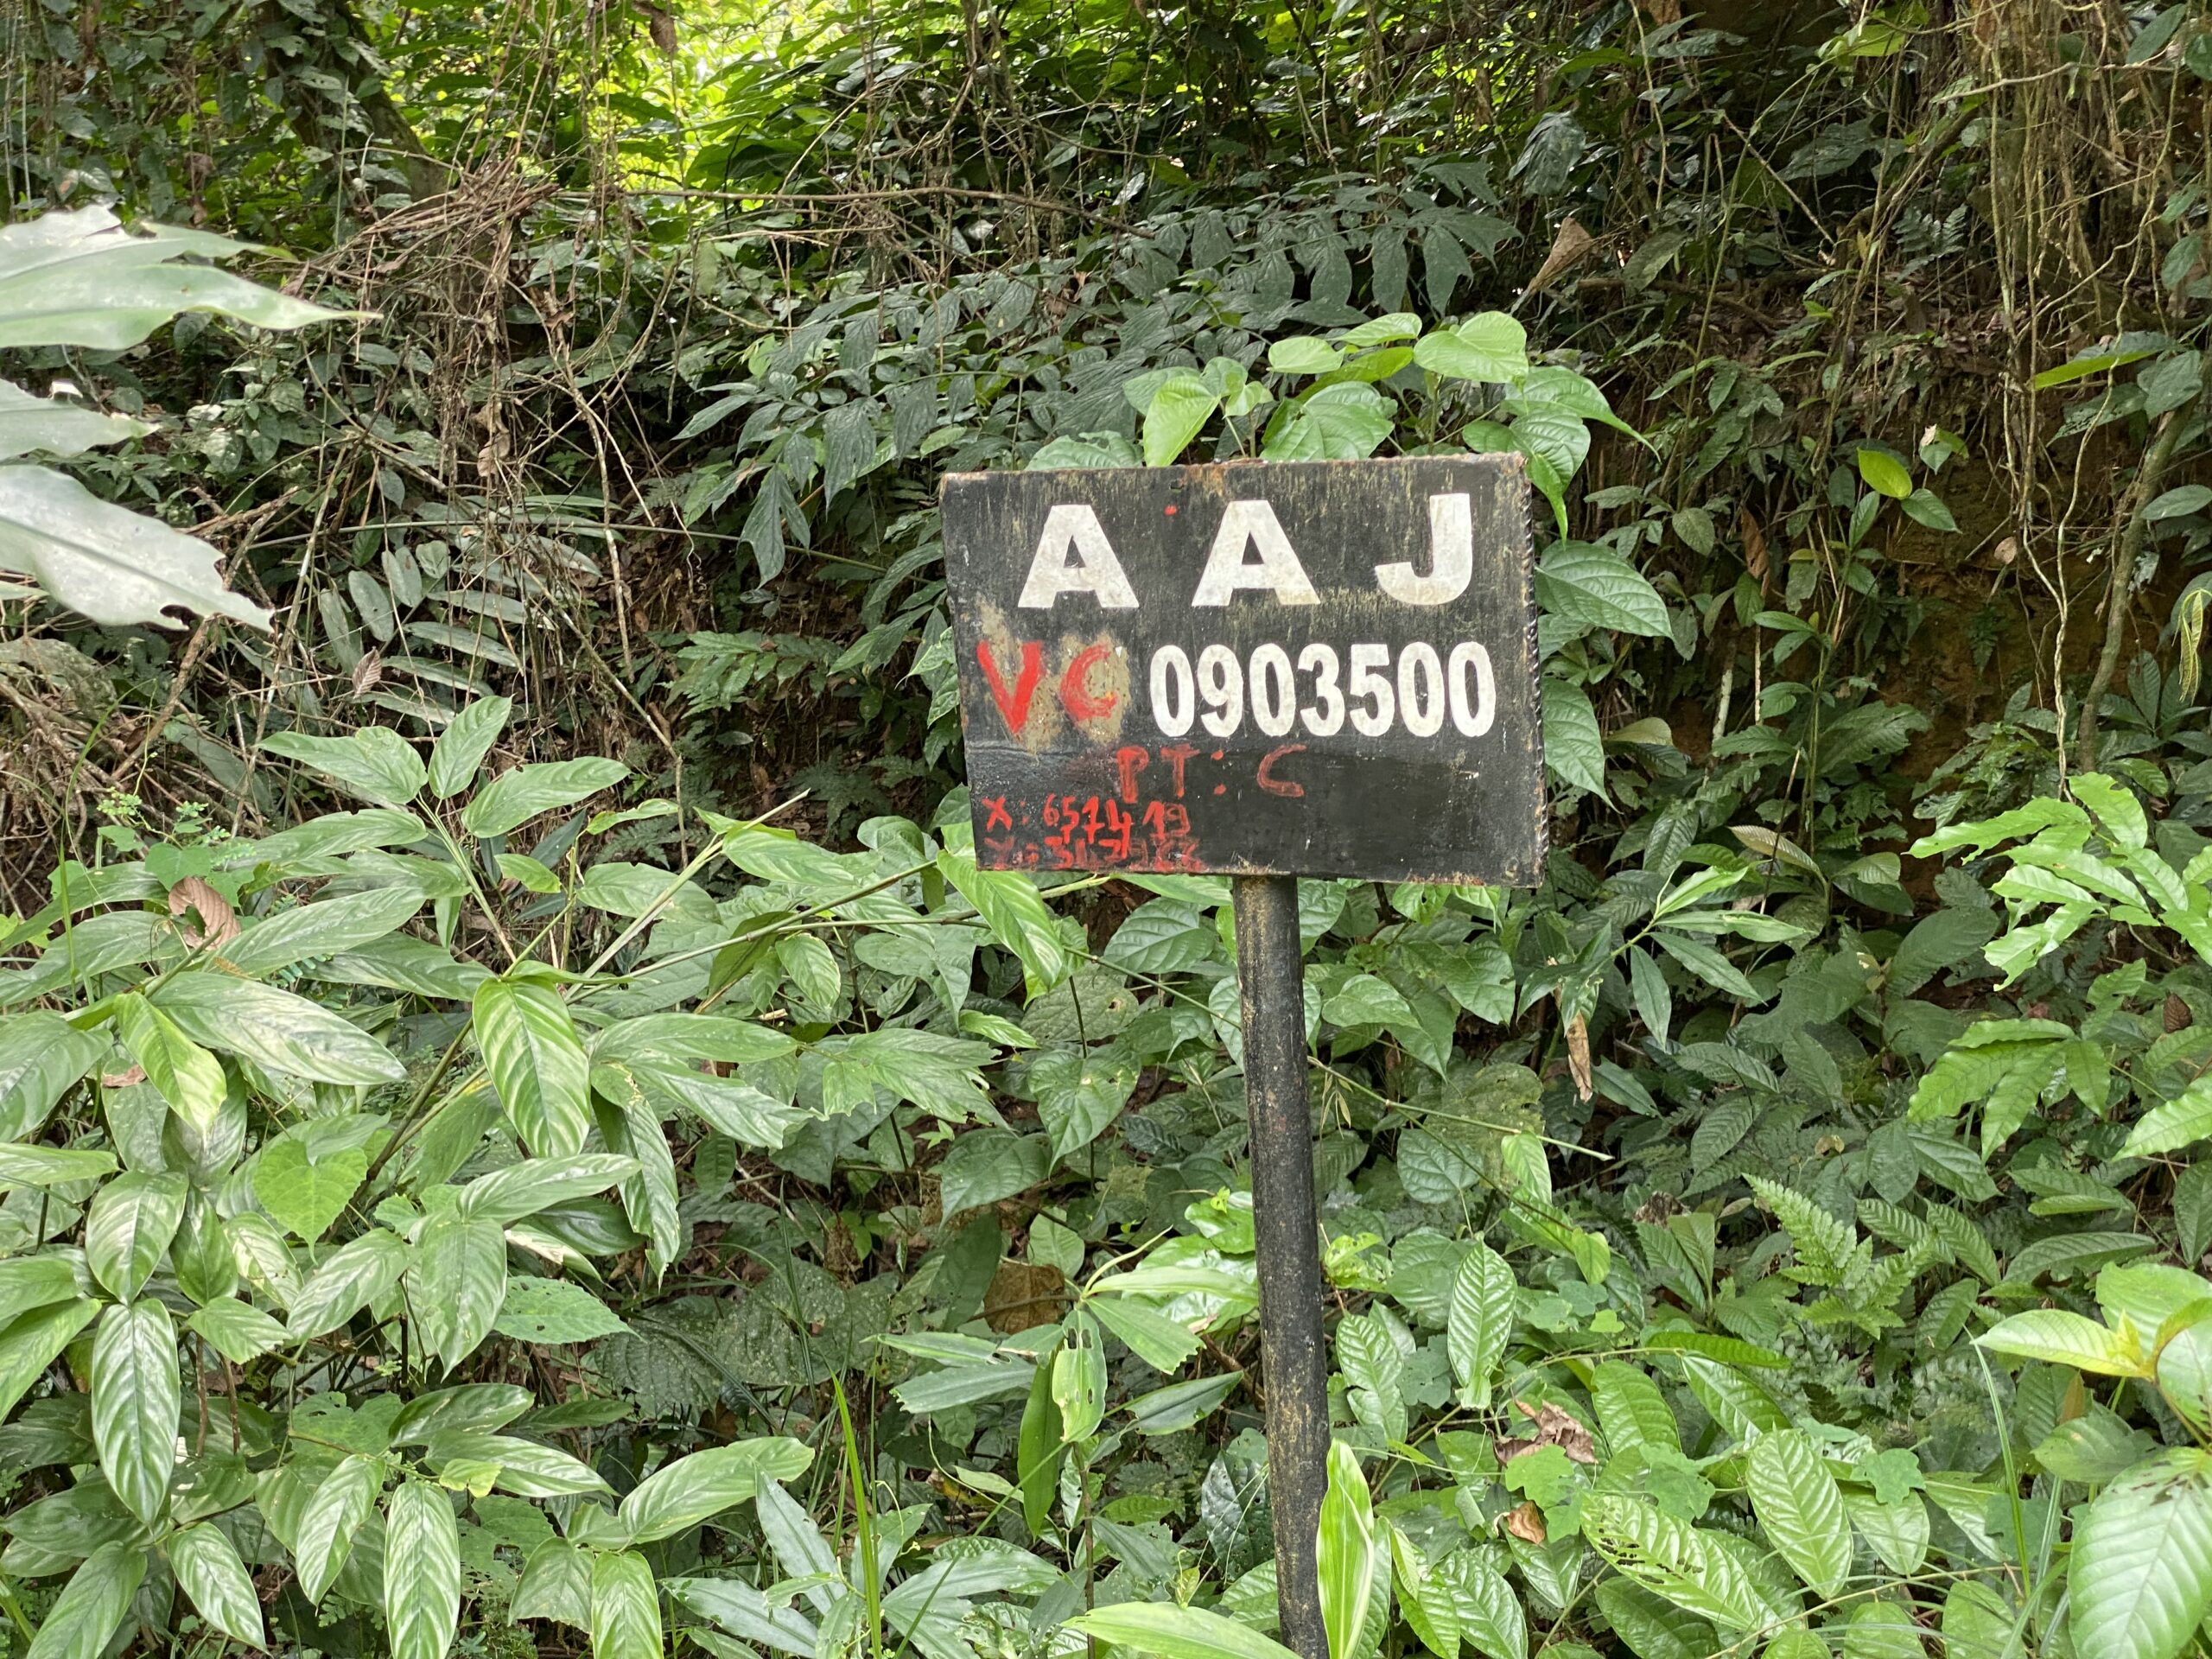 AAJ vente de coupe, in Cameroon forest. By infoCongo